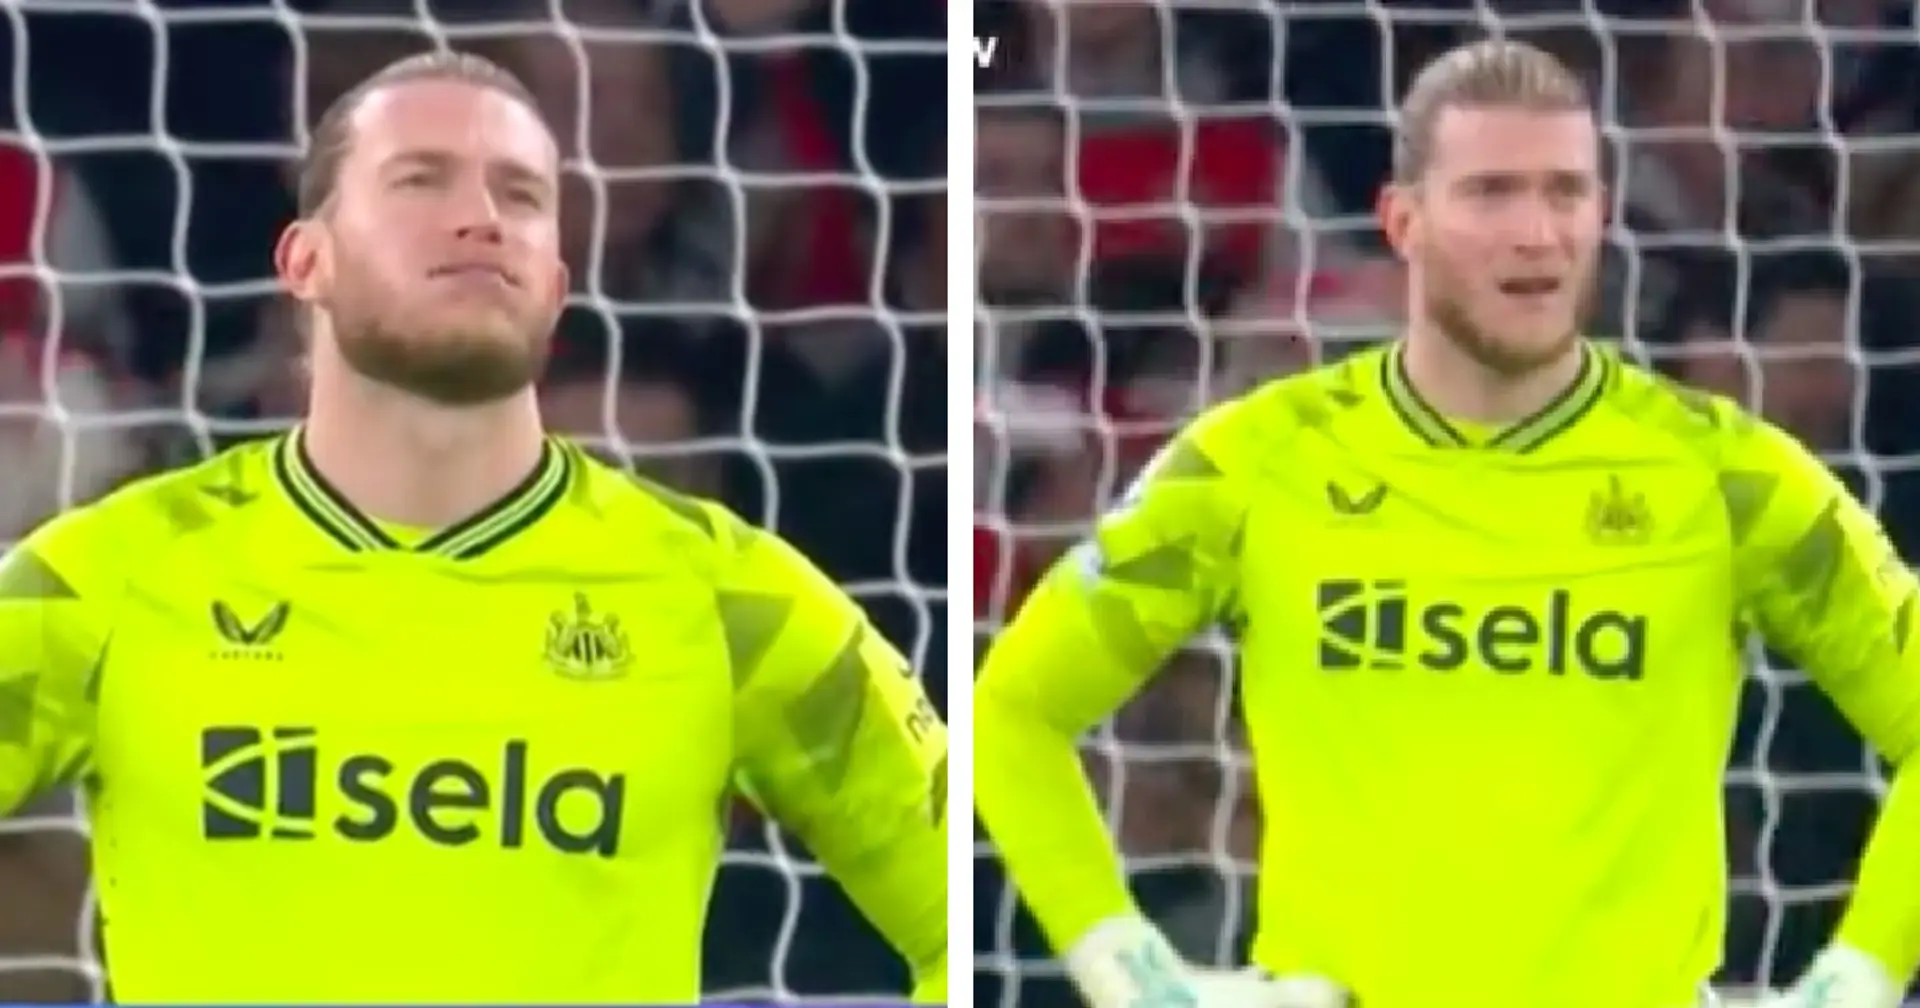 Newcastle goalkeeper Karius facial reaction to Saka's goal - he was almost in tears 